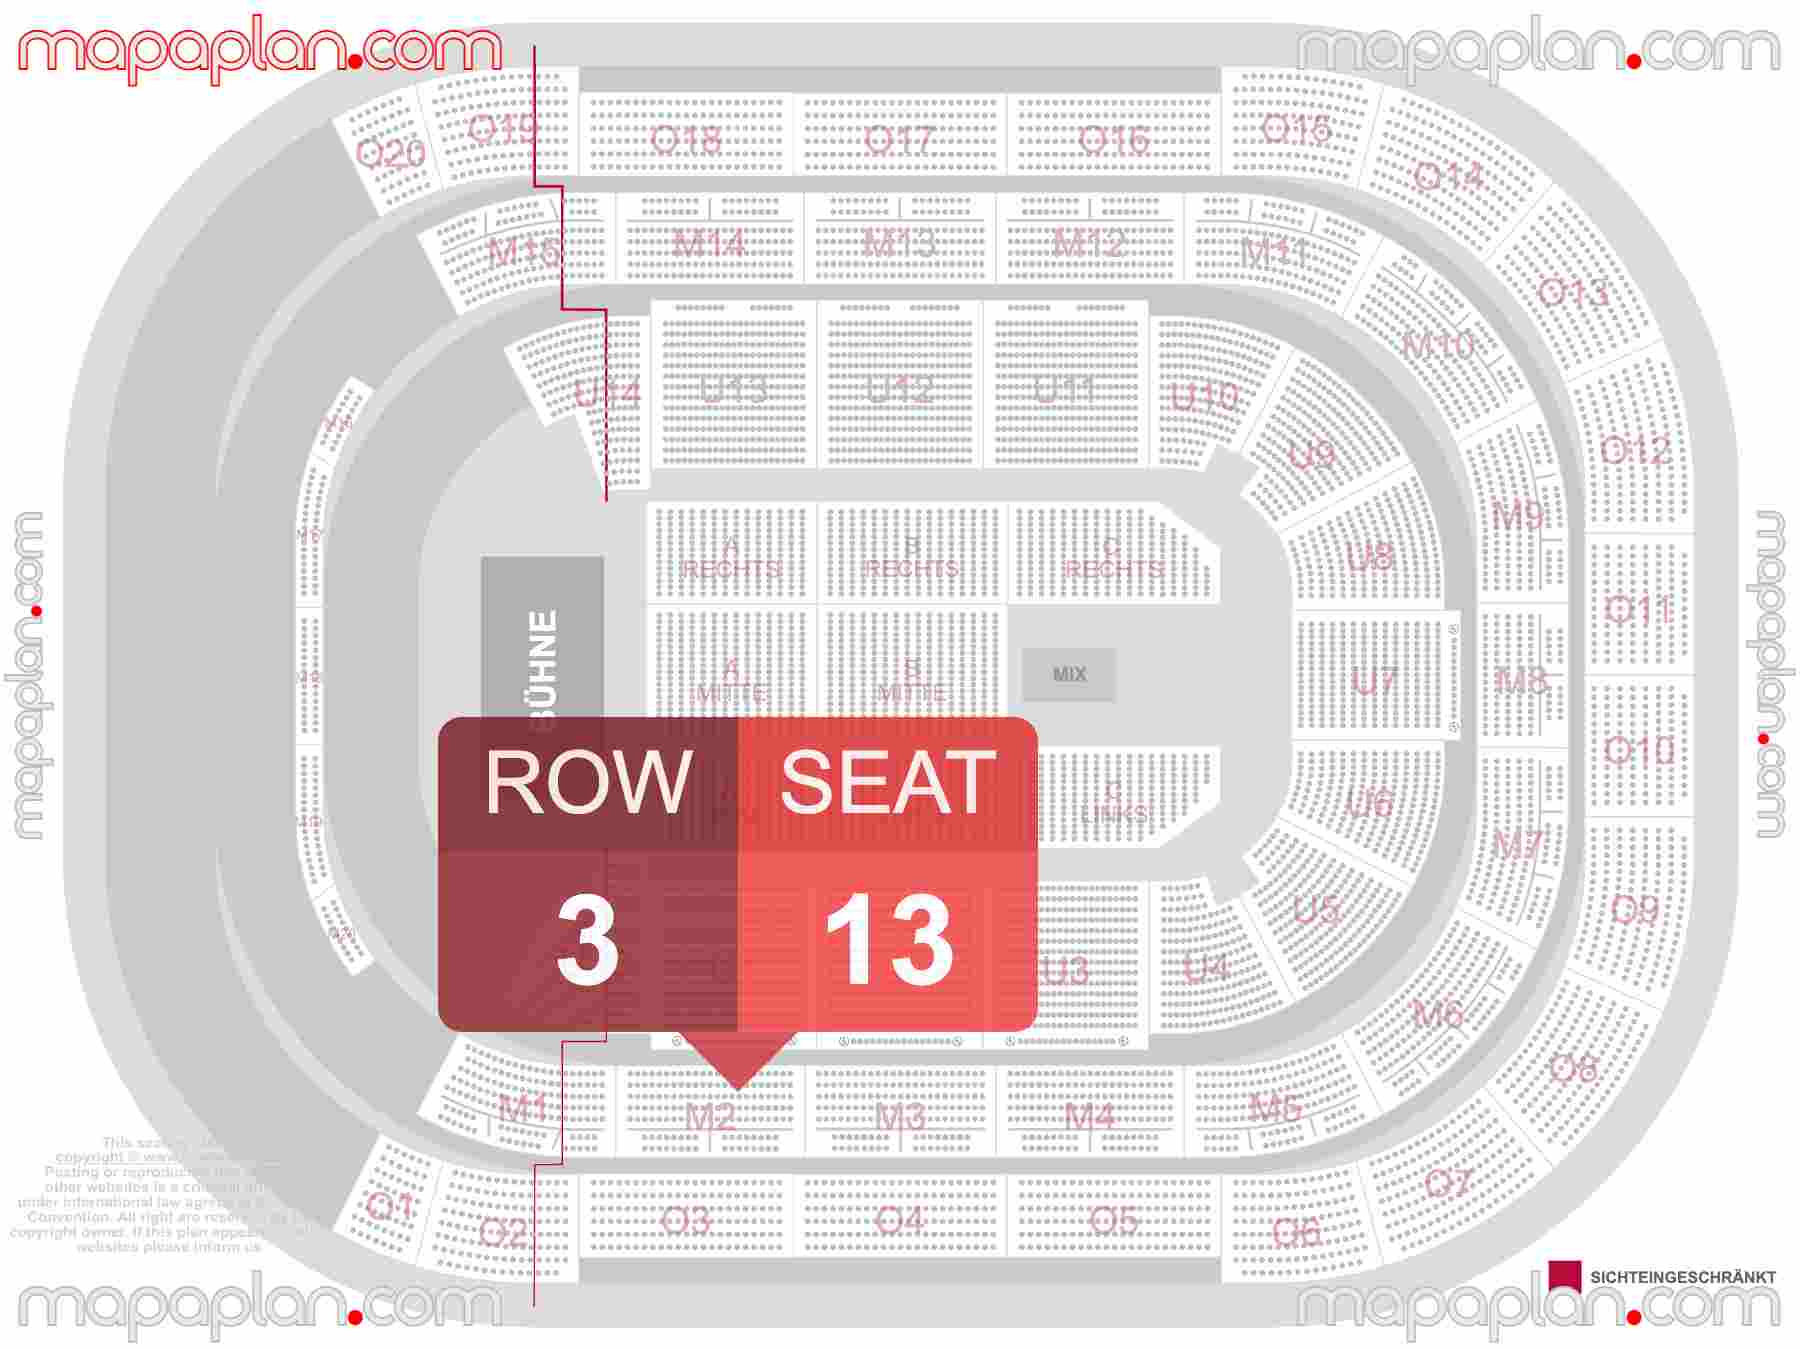 Hannover ZAG Arena seating plan Concert Konzerte Sitzplan mit Sitzplatz & Reihennummerierung detailed seat numbers and row numbering plan with interactive map map layout